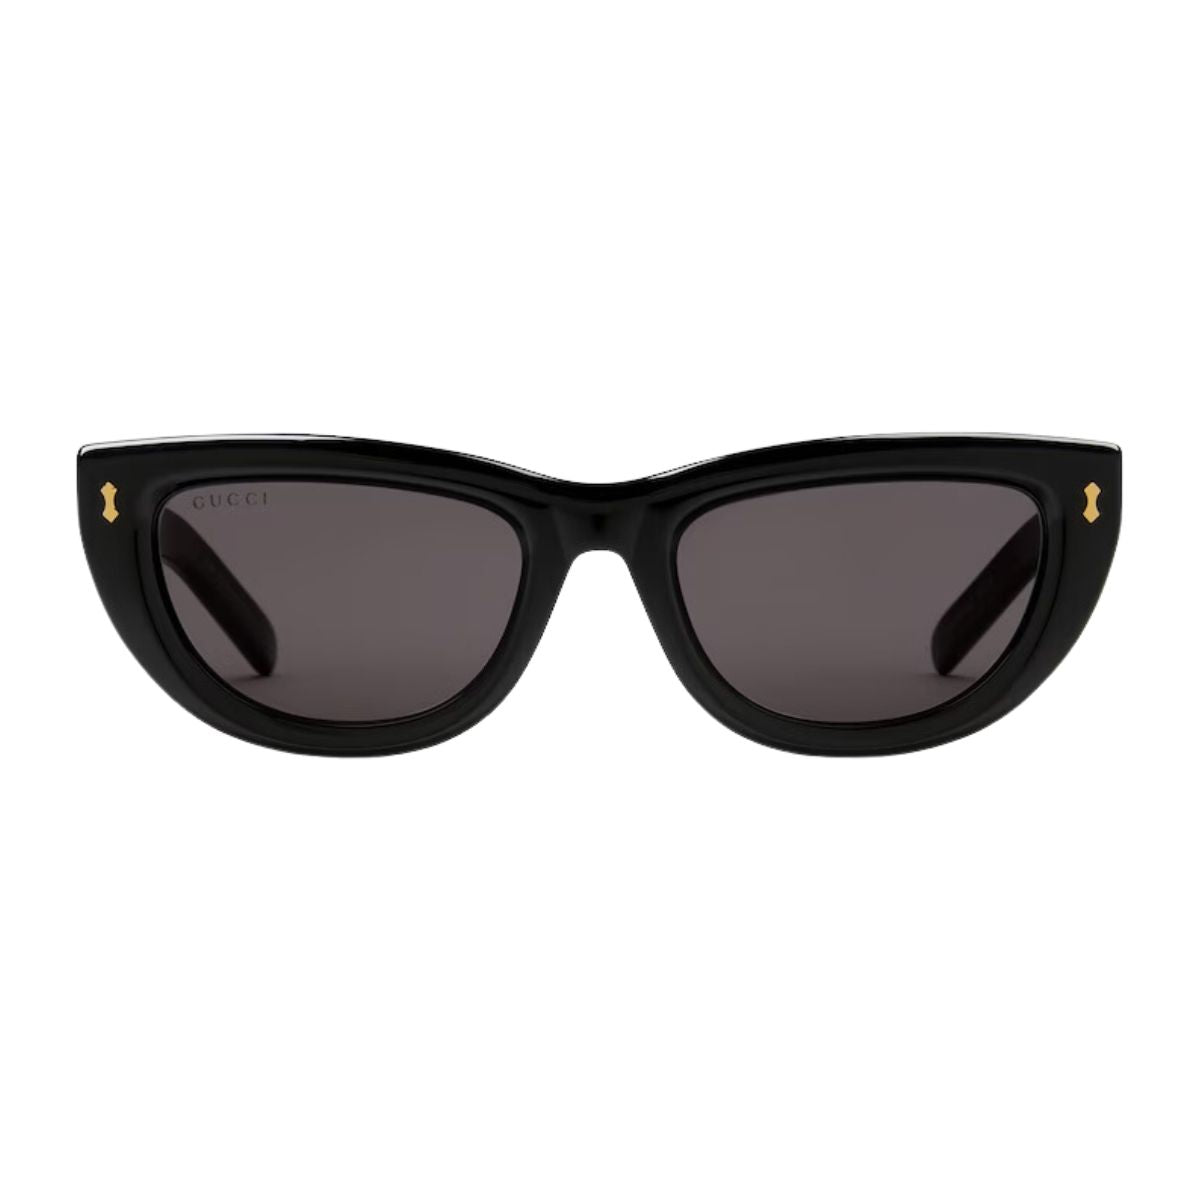 "Stylish Women's Gucci Sunglasses - Optorium's Exclusive Collection"